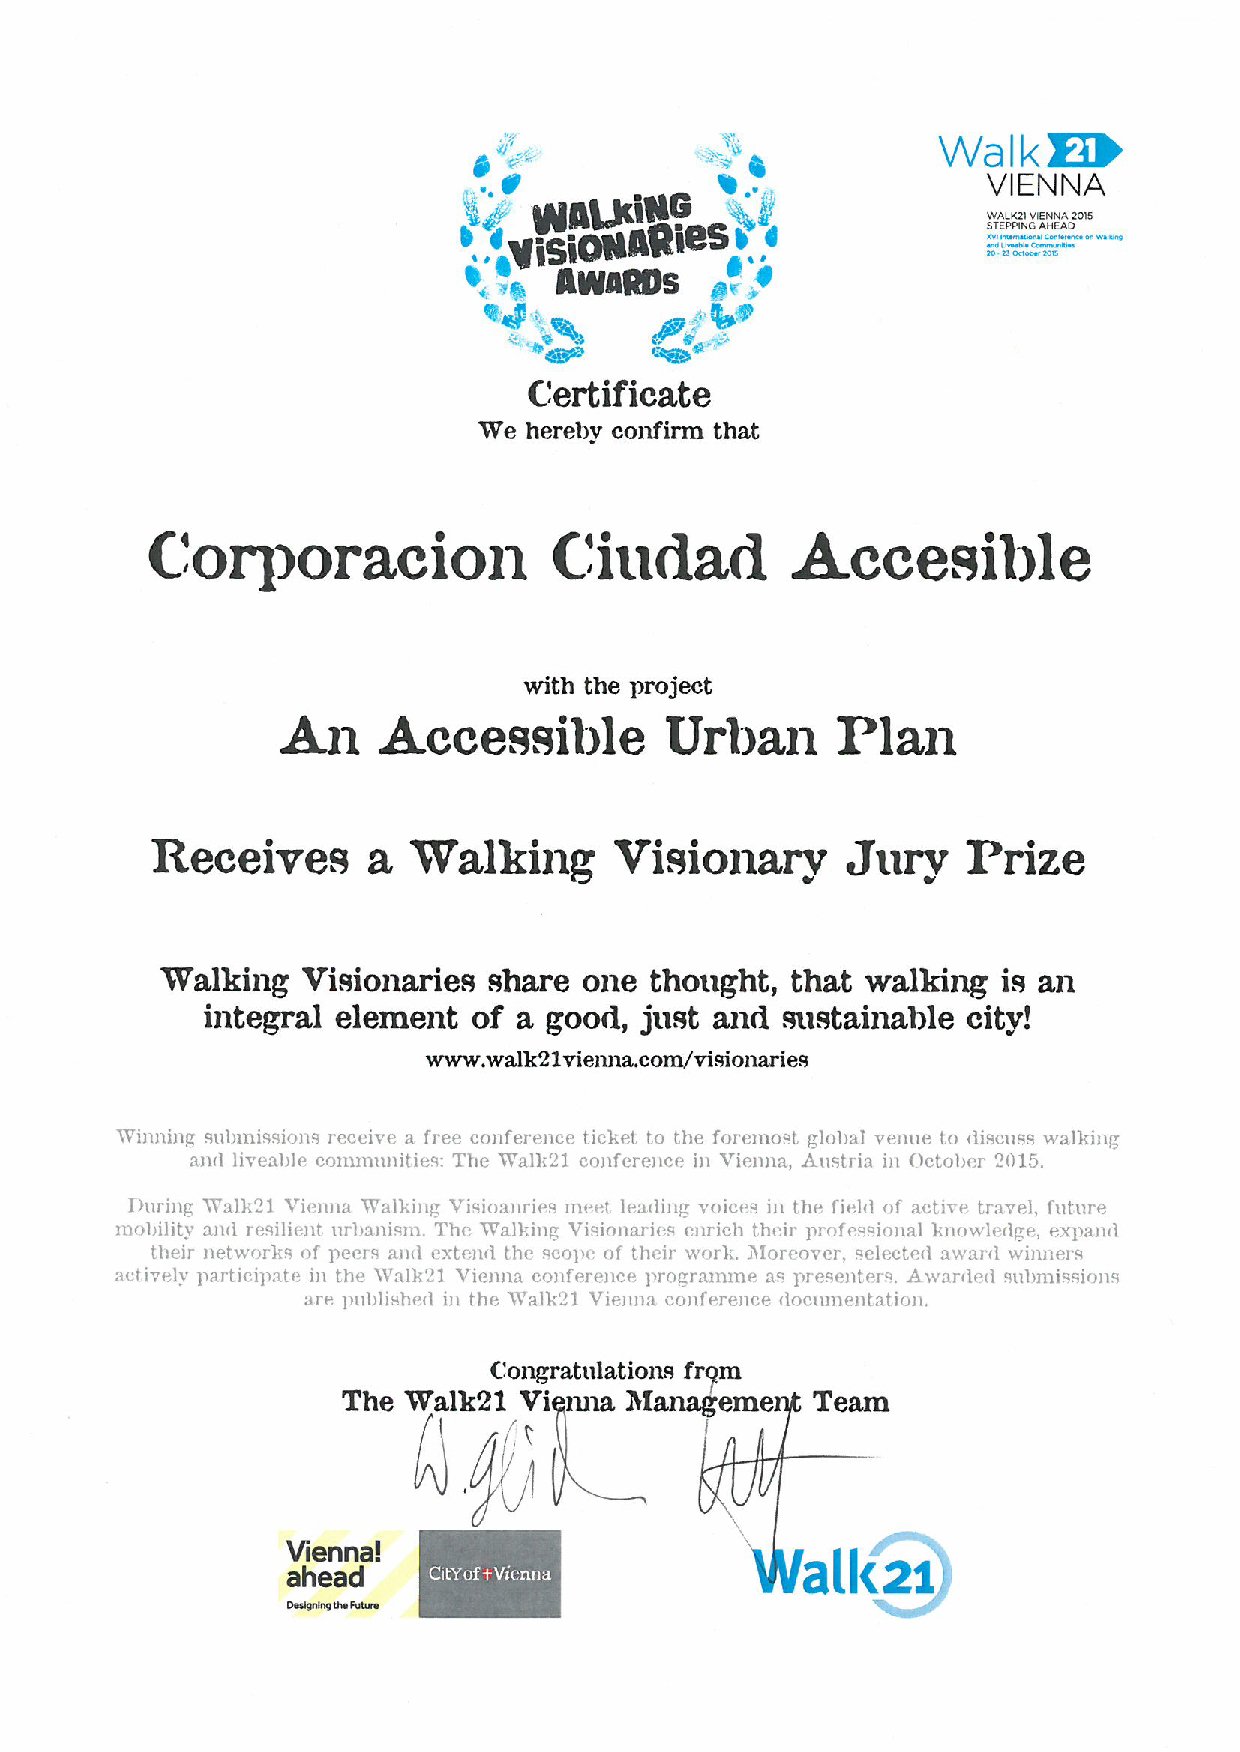 Certificado premio WalkVision_20150807_An Accessible Urban Plan